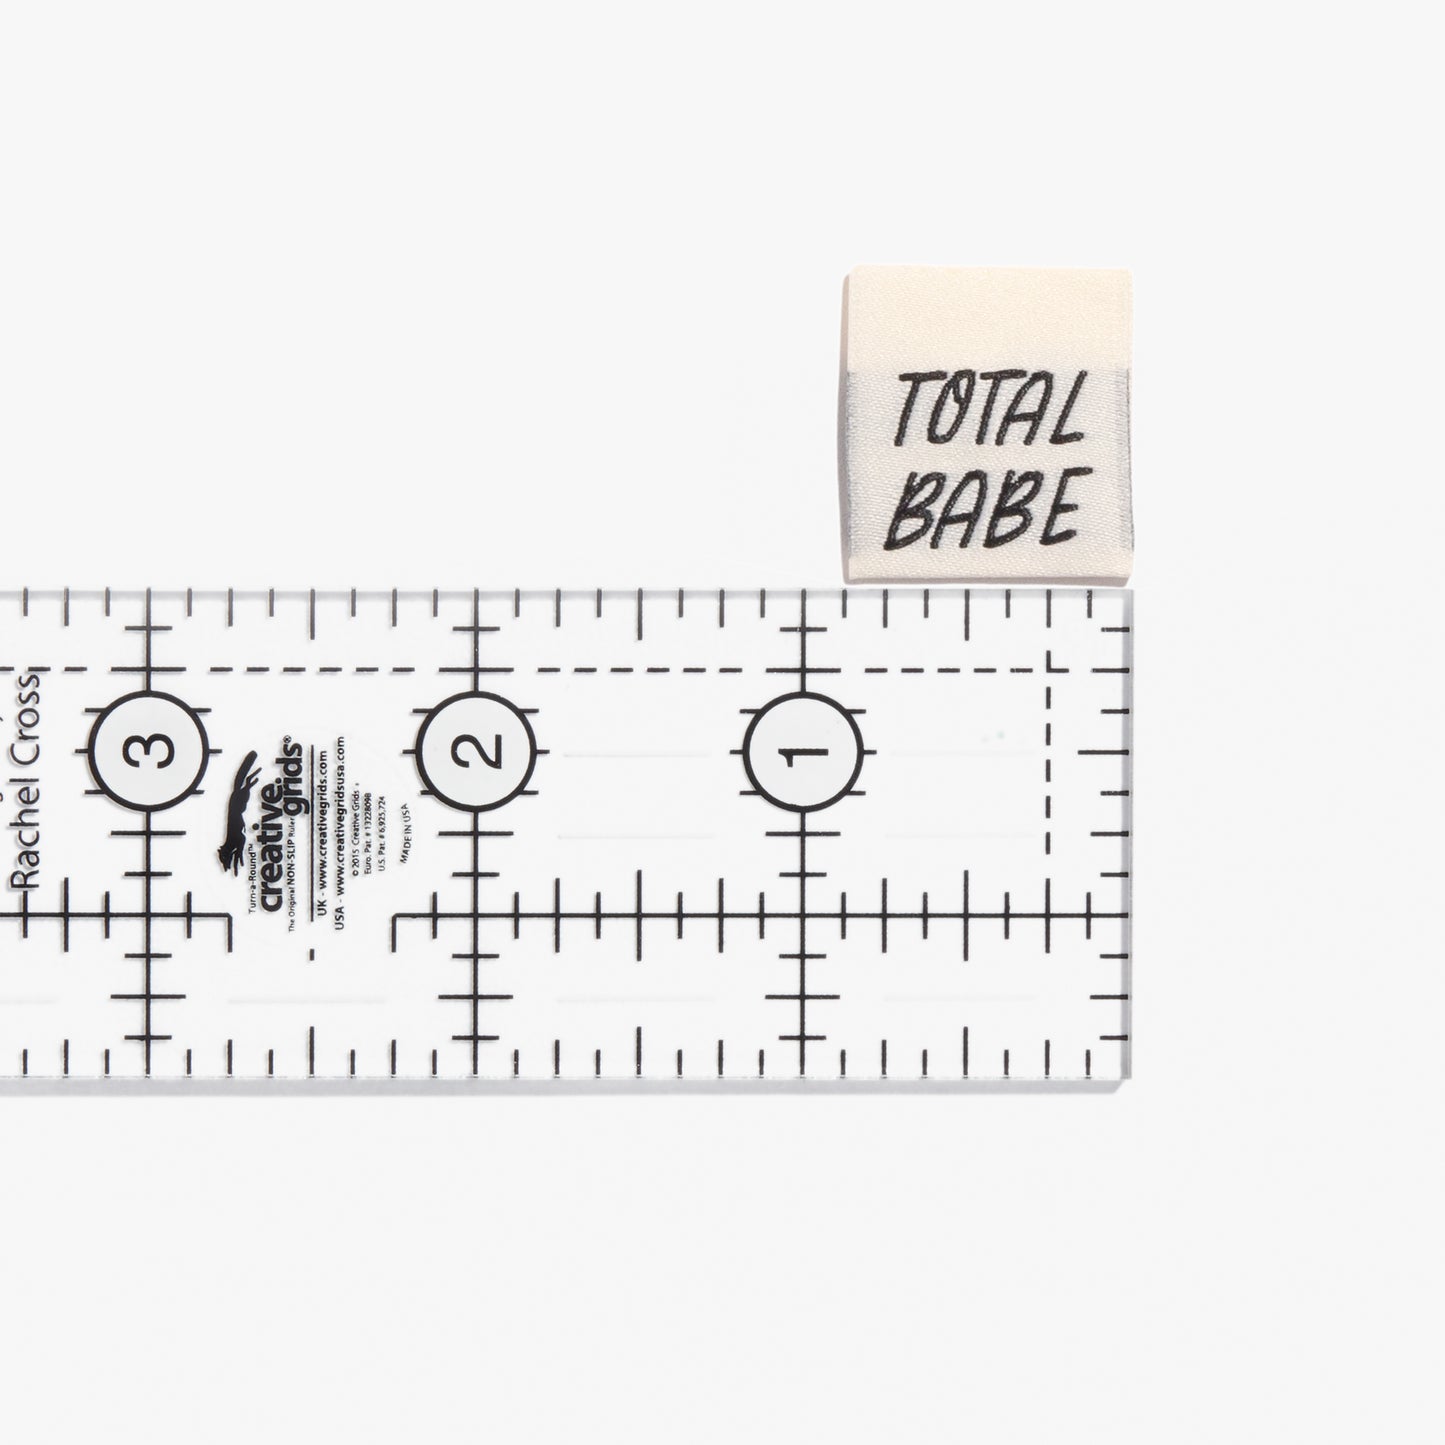 Tags "Total Babe" - KATM